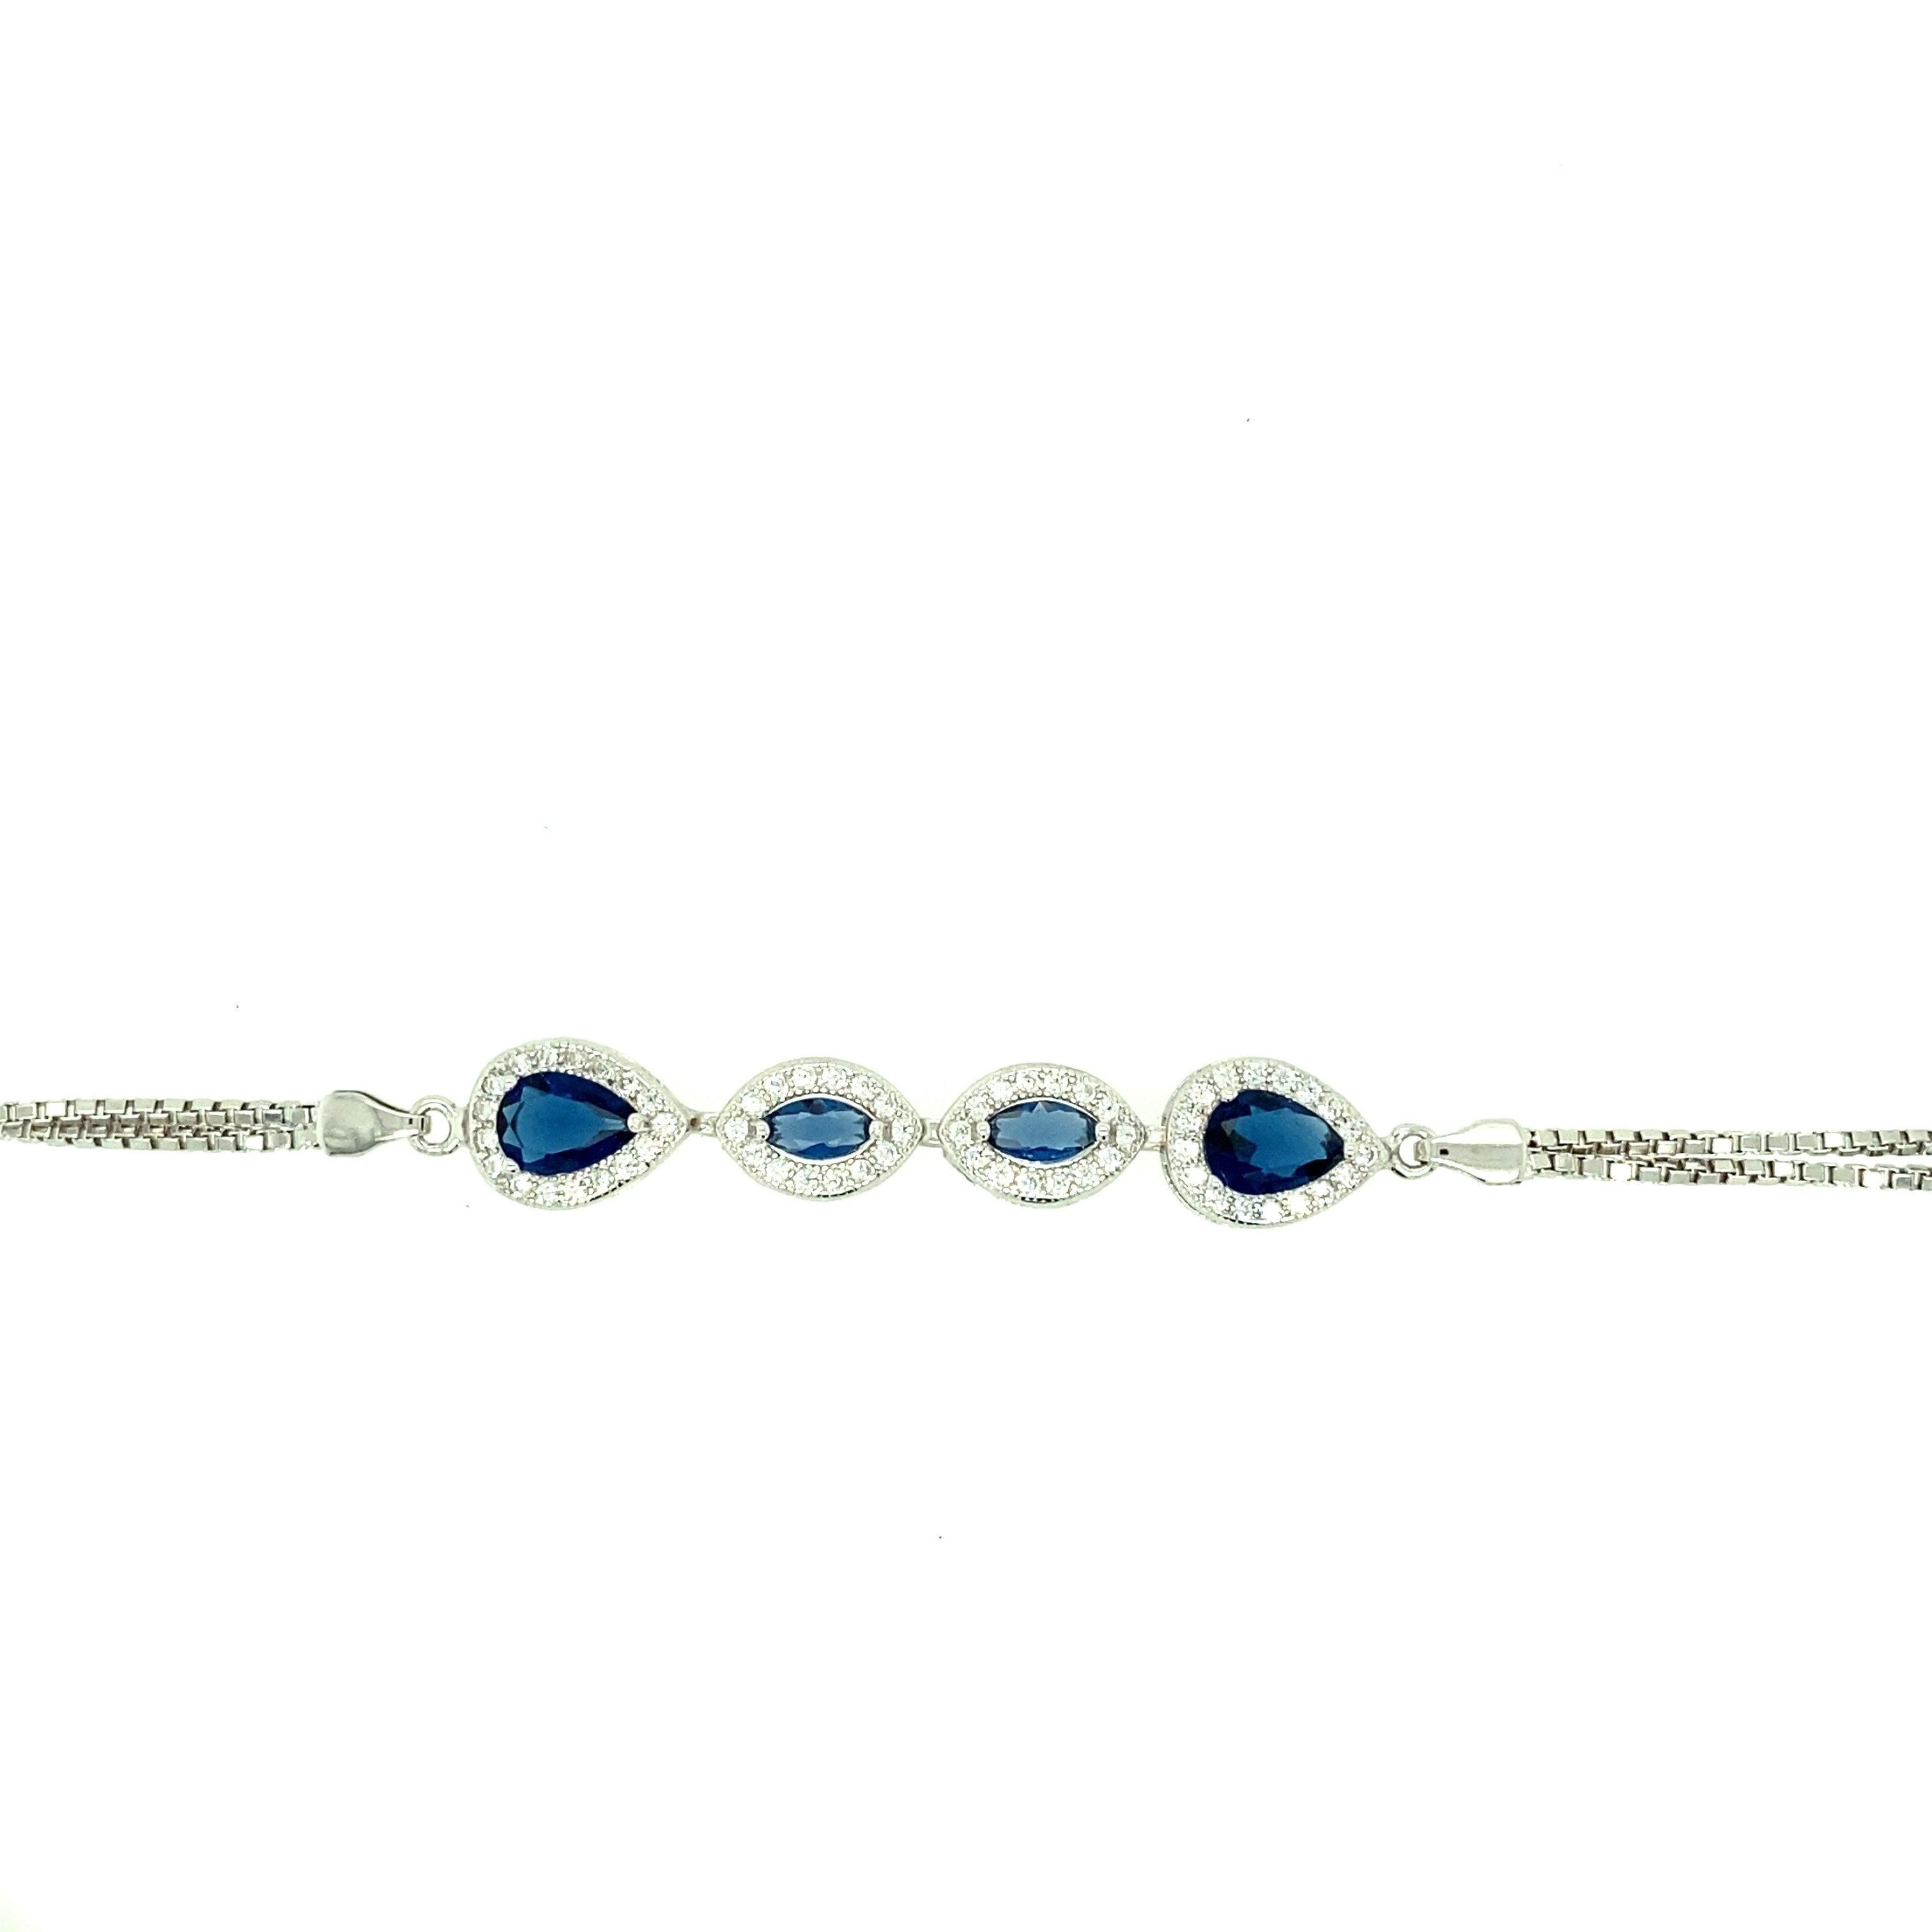 Bracelet b1600-b - 925 Sterling Silver - Asfour Crystal